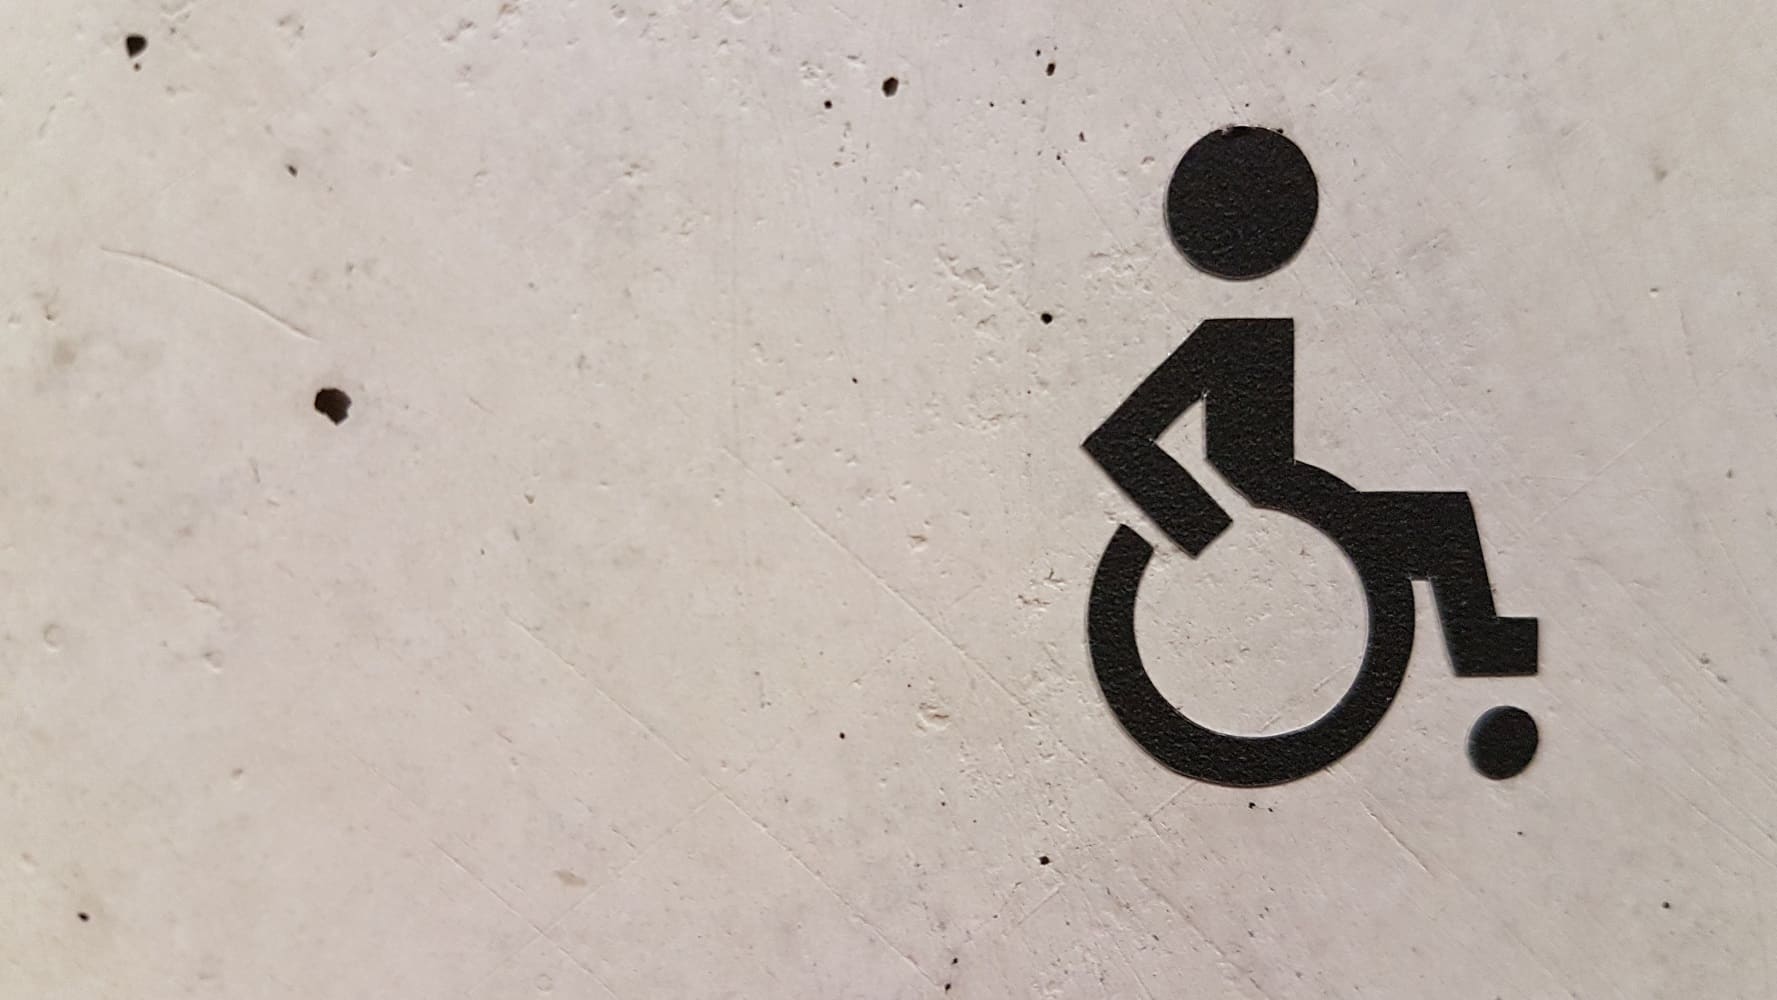 Accessibility in architecture